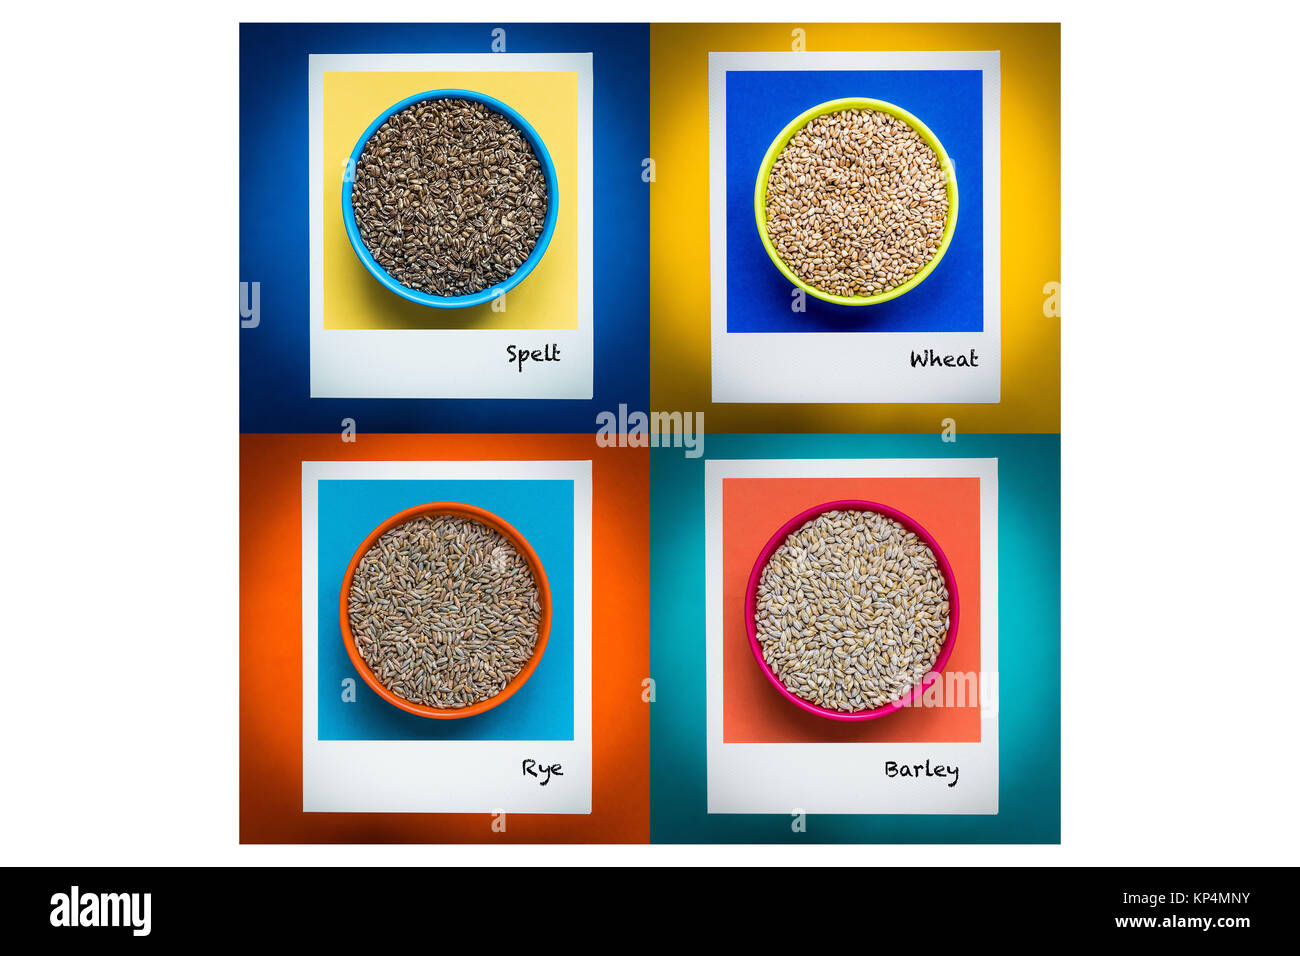 Foods containing gluten( selt, wheat, rye, barley ). Stock Photo